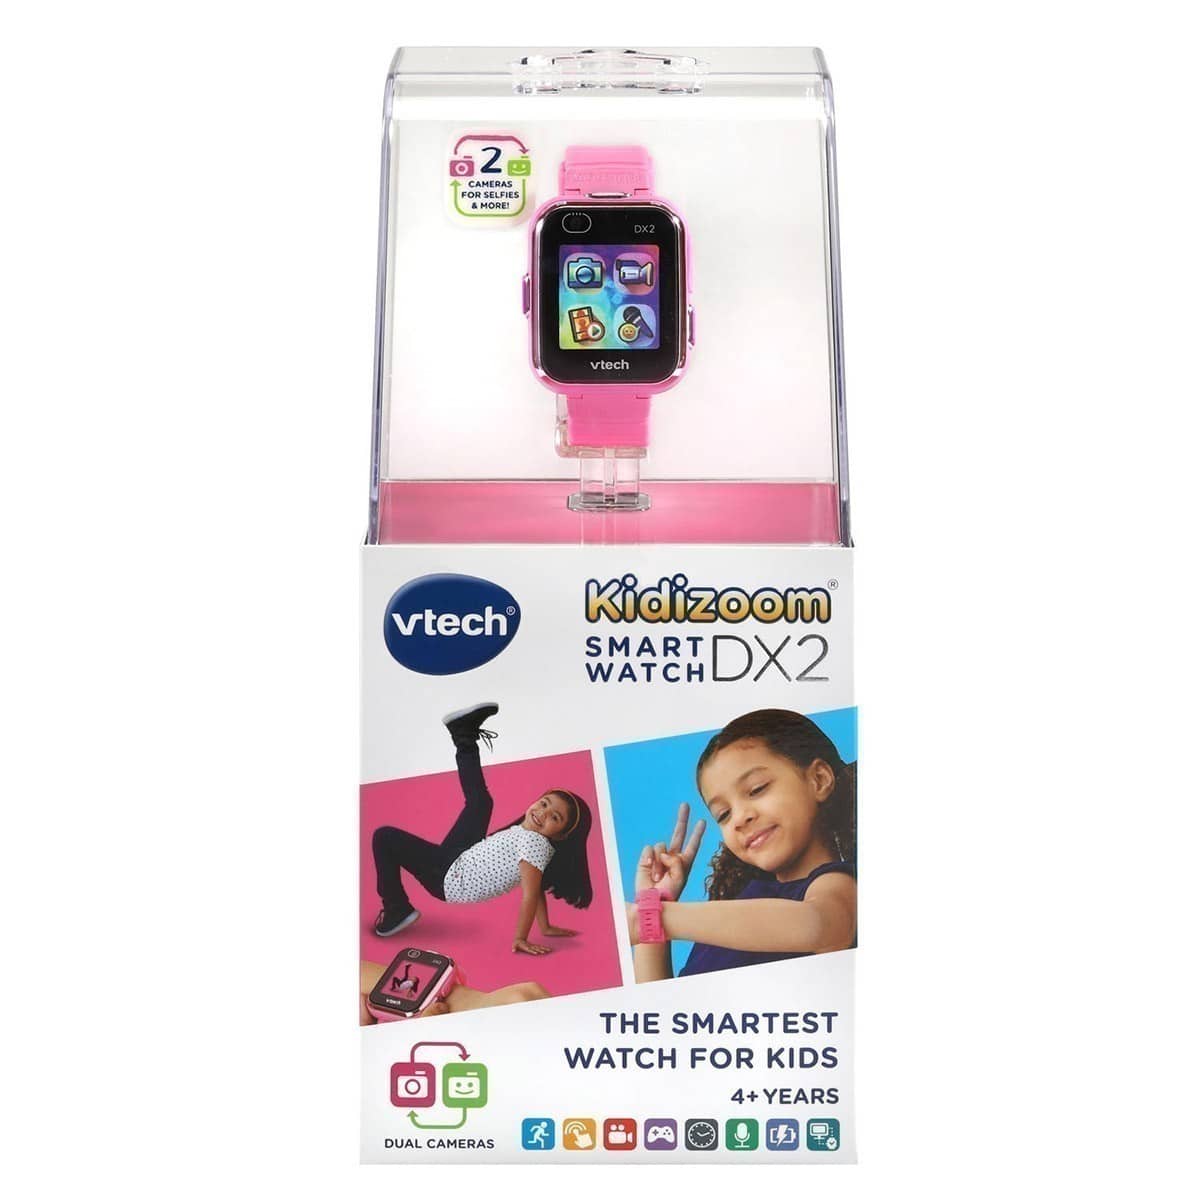 Vtech - Kidizoom Smart Watch DX 2 - Pink